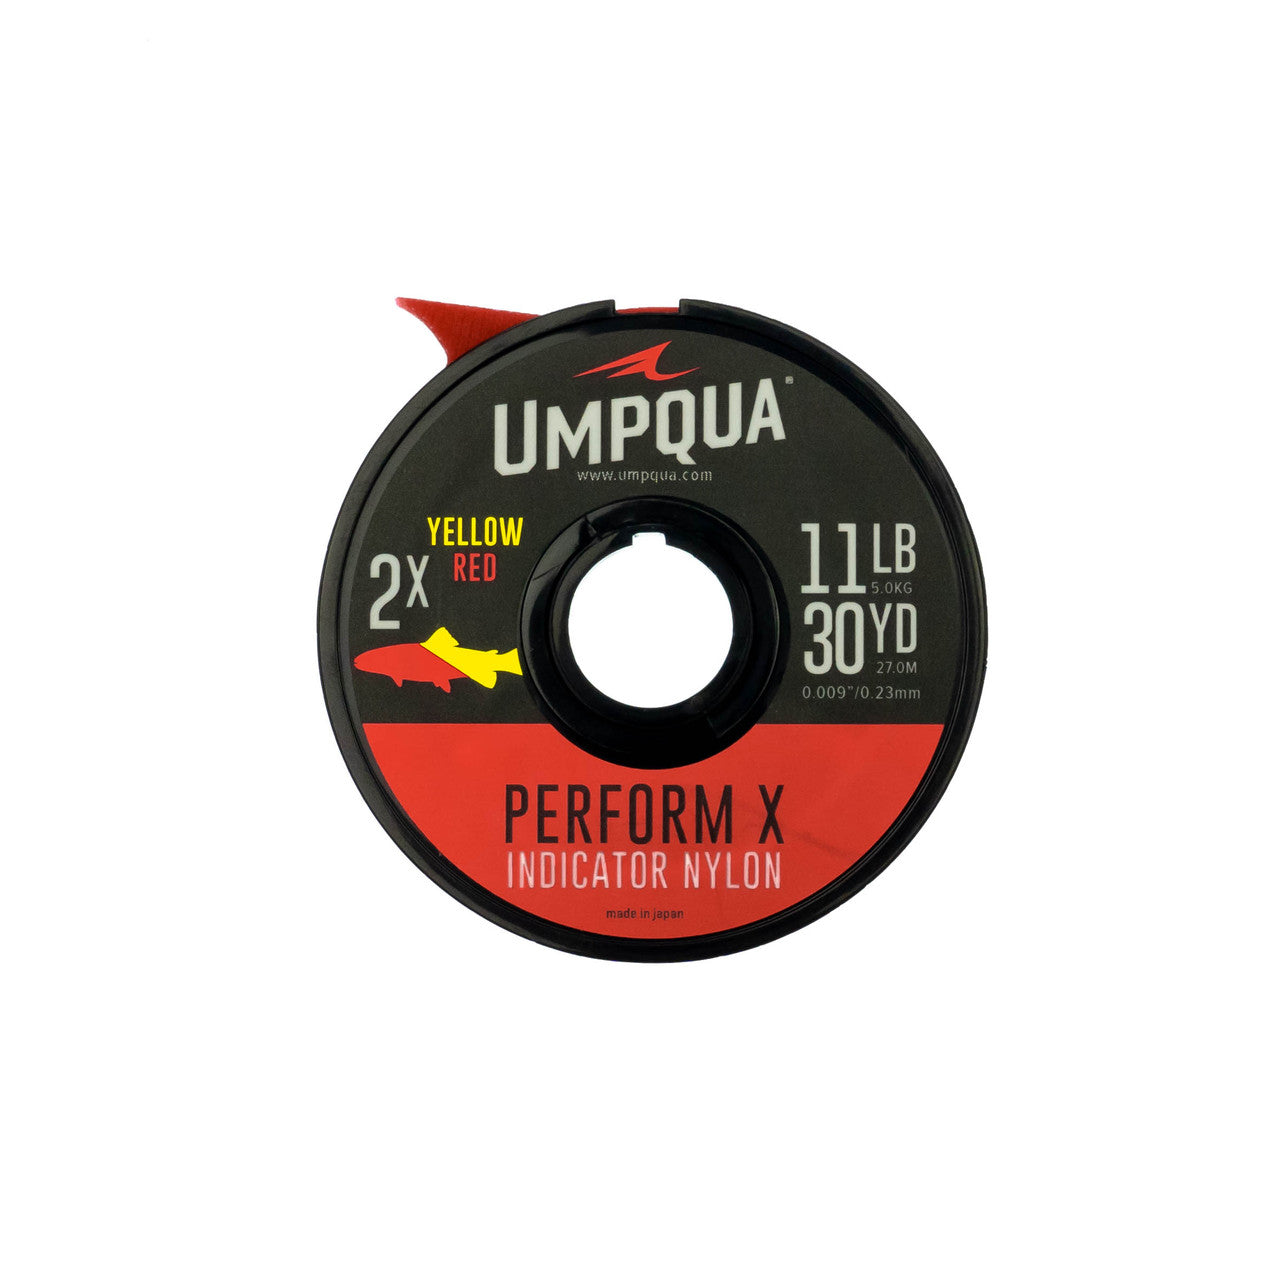 Umpqua Perform X Indicator Nylon Tippet